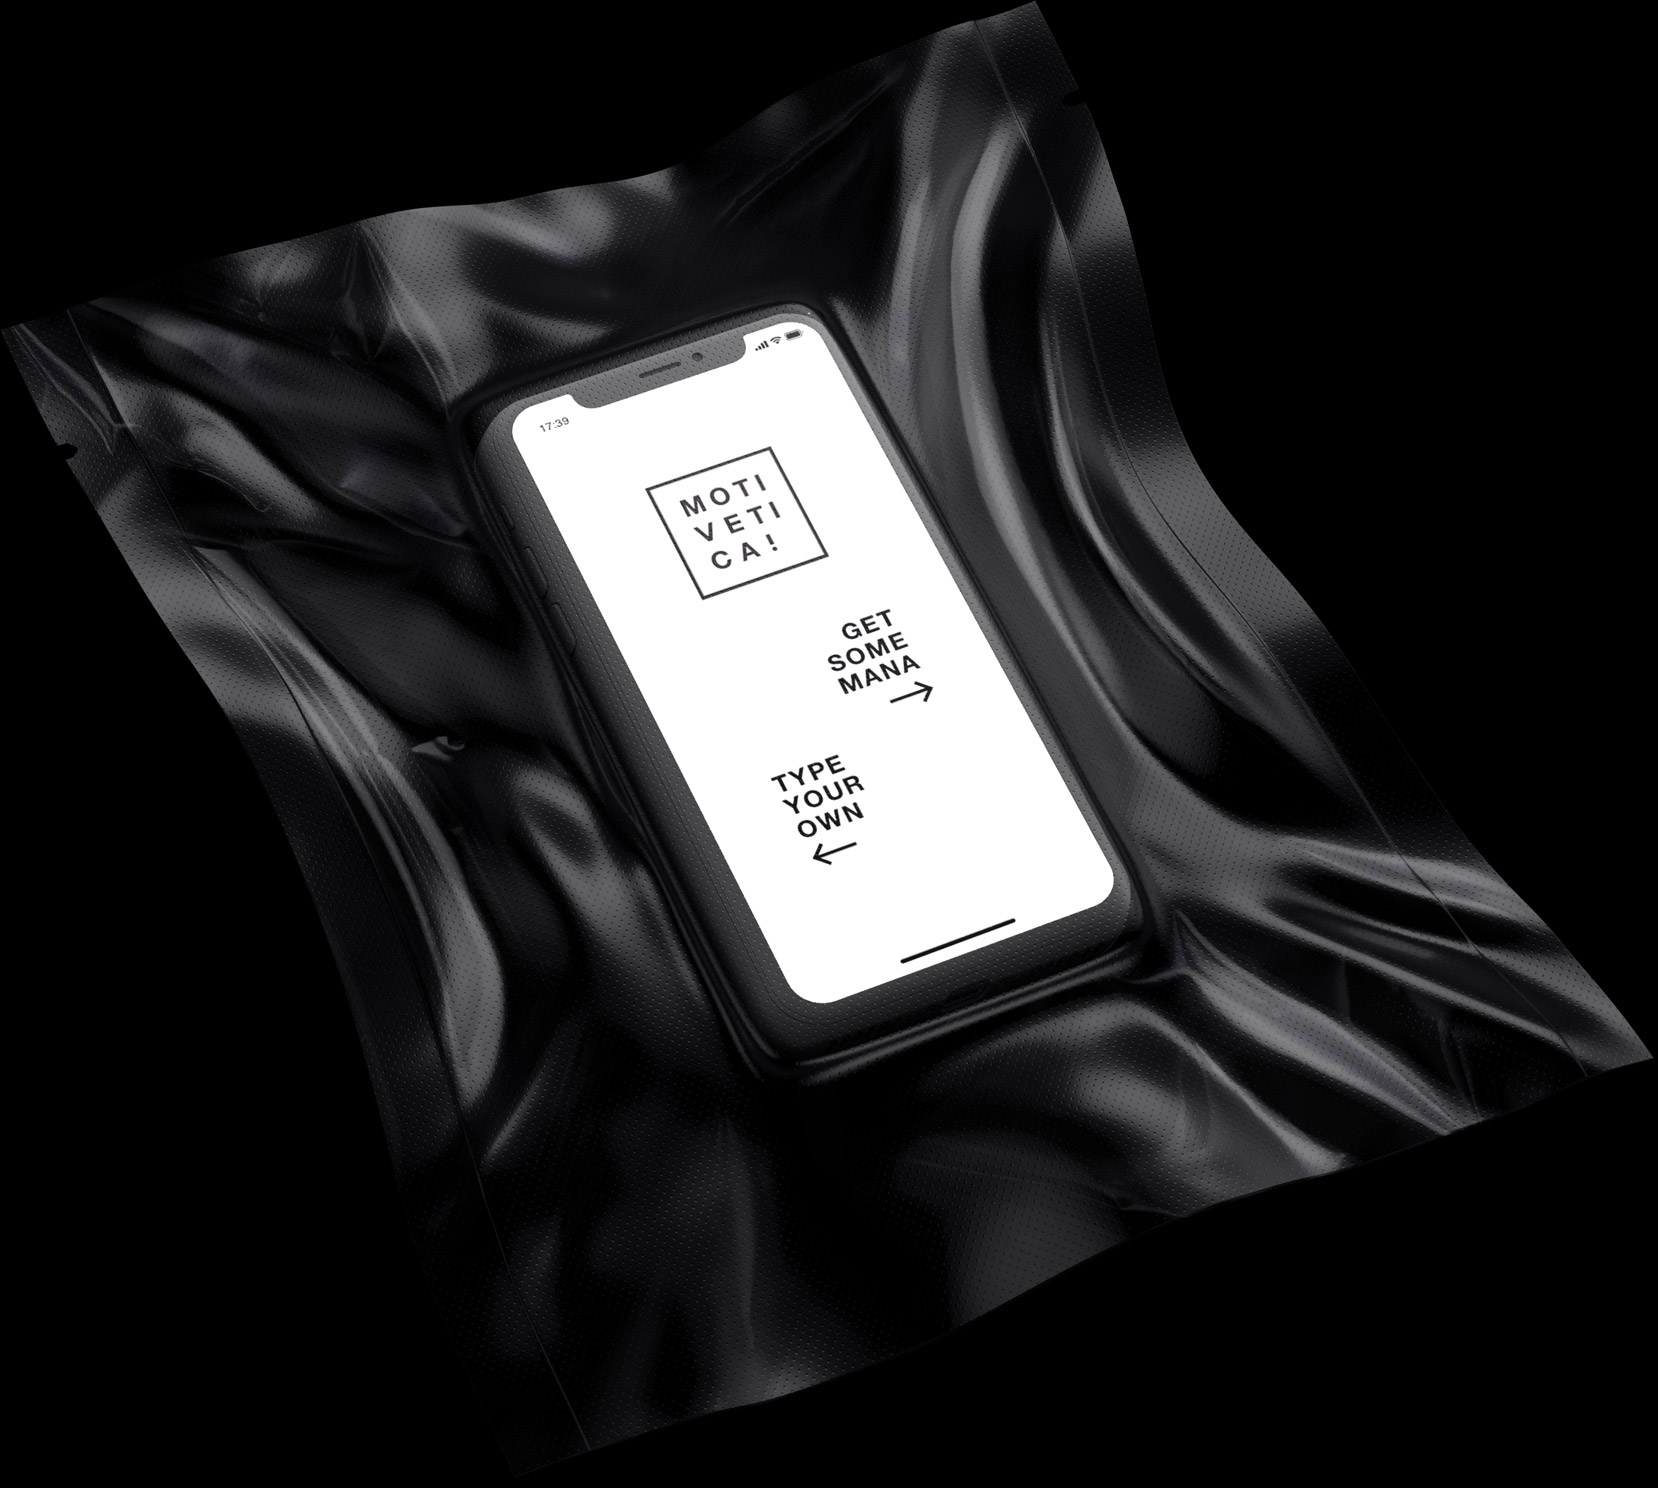 Illustration: Iphone with Motivetica app on black plastic